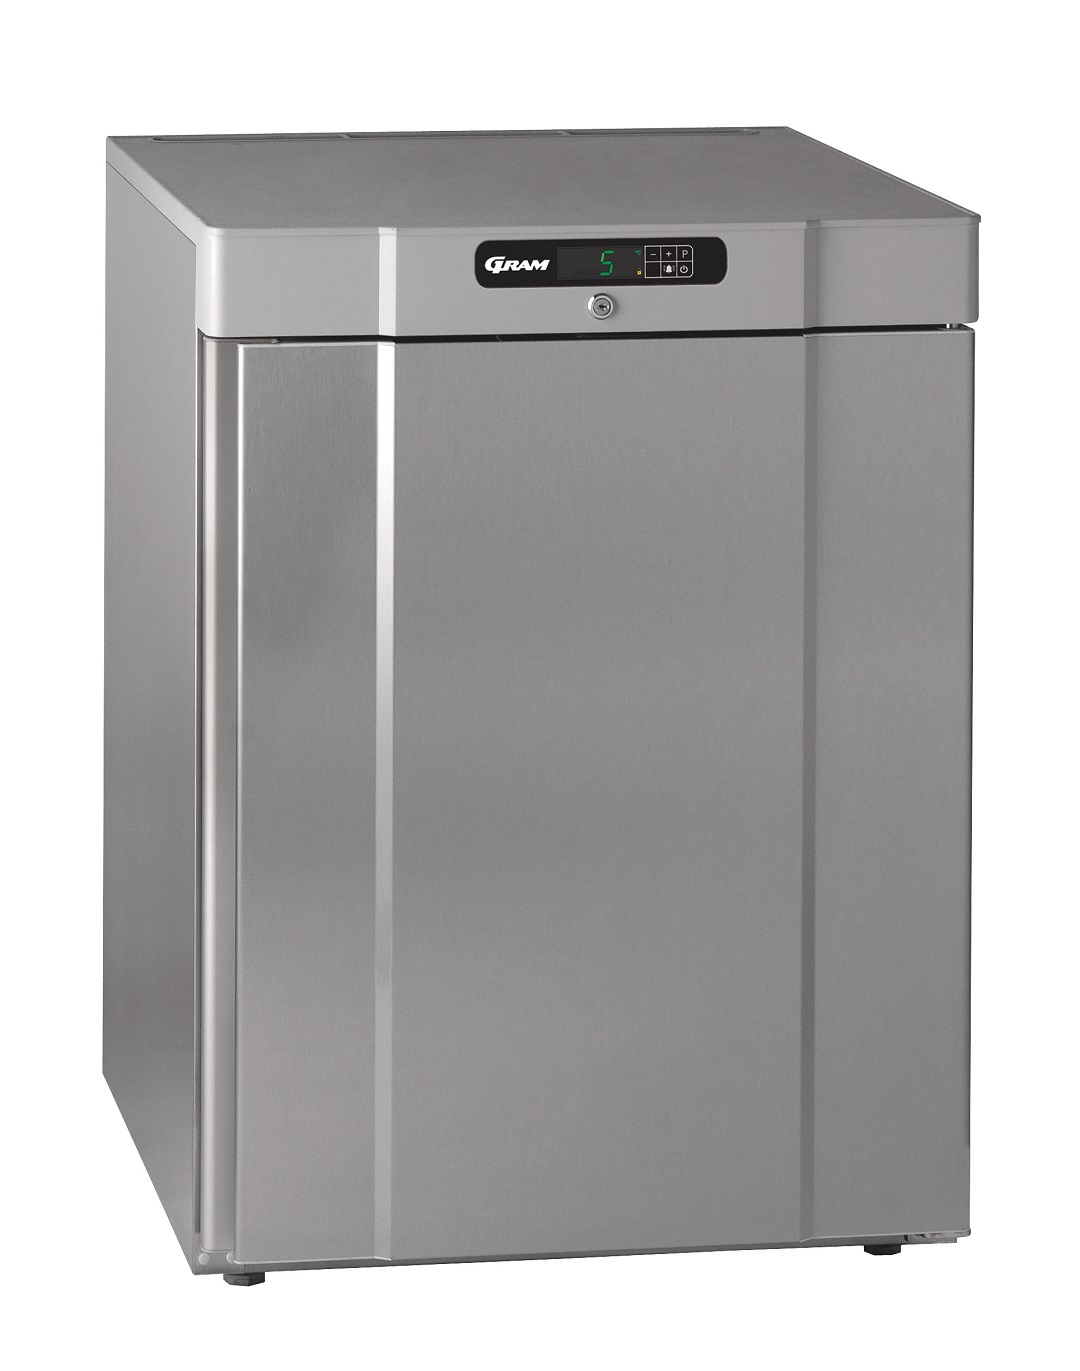 Gram Compact  K 220 R - DR G U Undercounter Refrigerator (151220030)